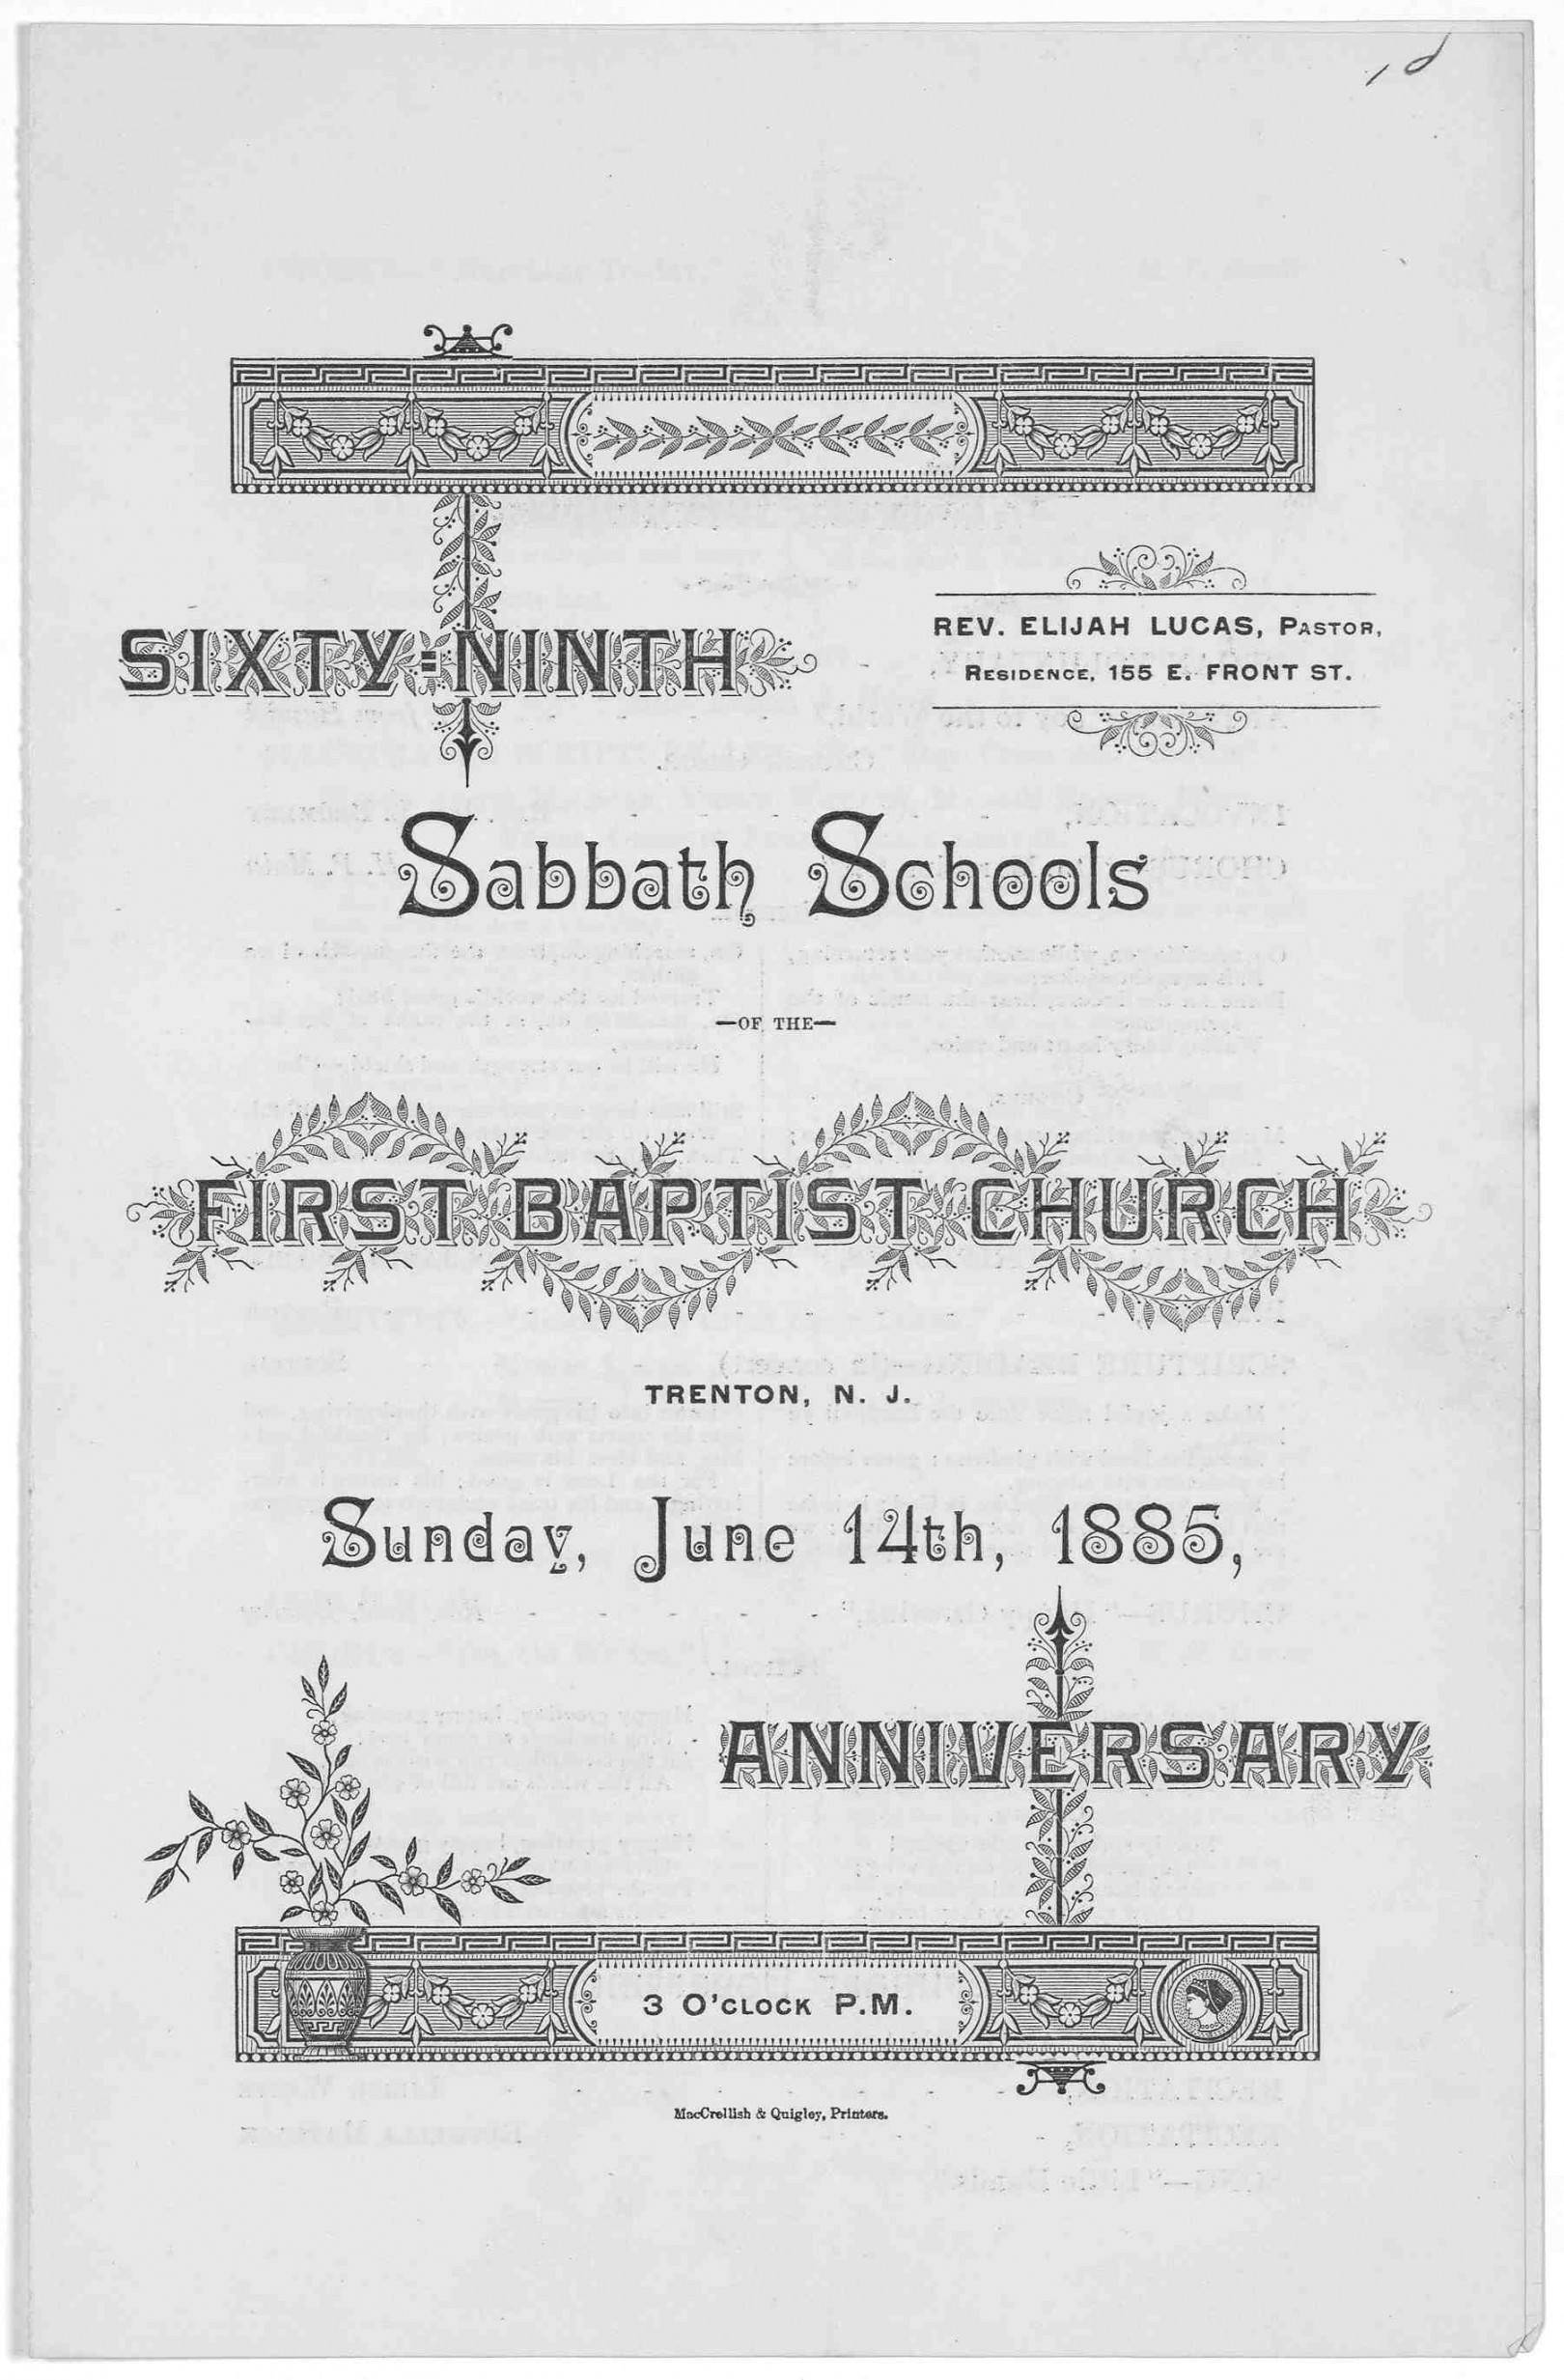 Sixty-ninth Sabbath schools of the First Baptist church